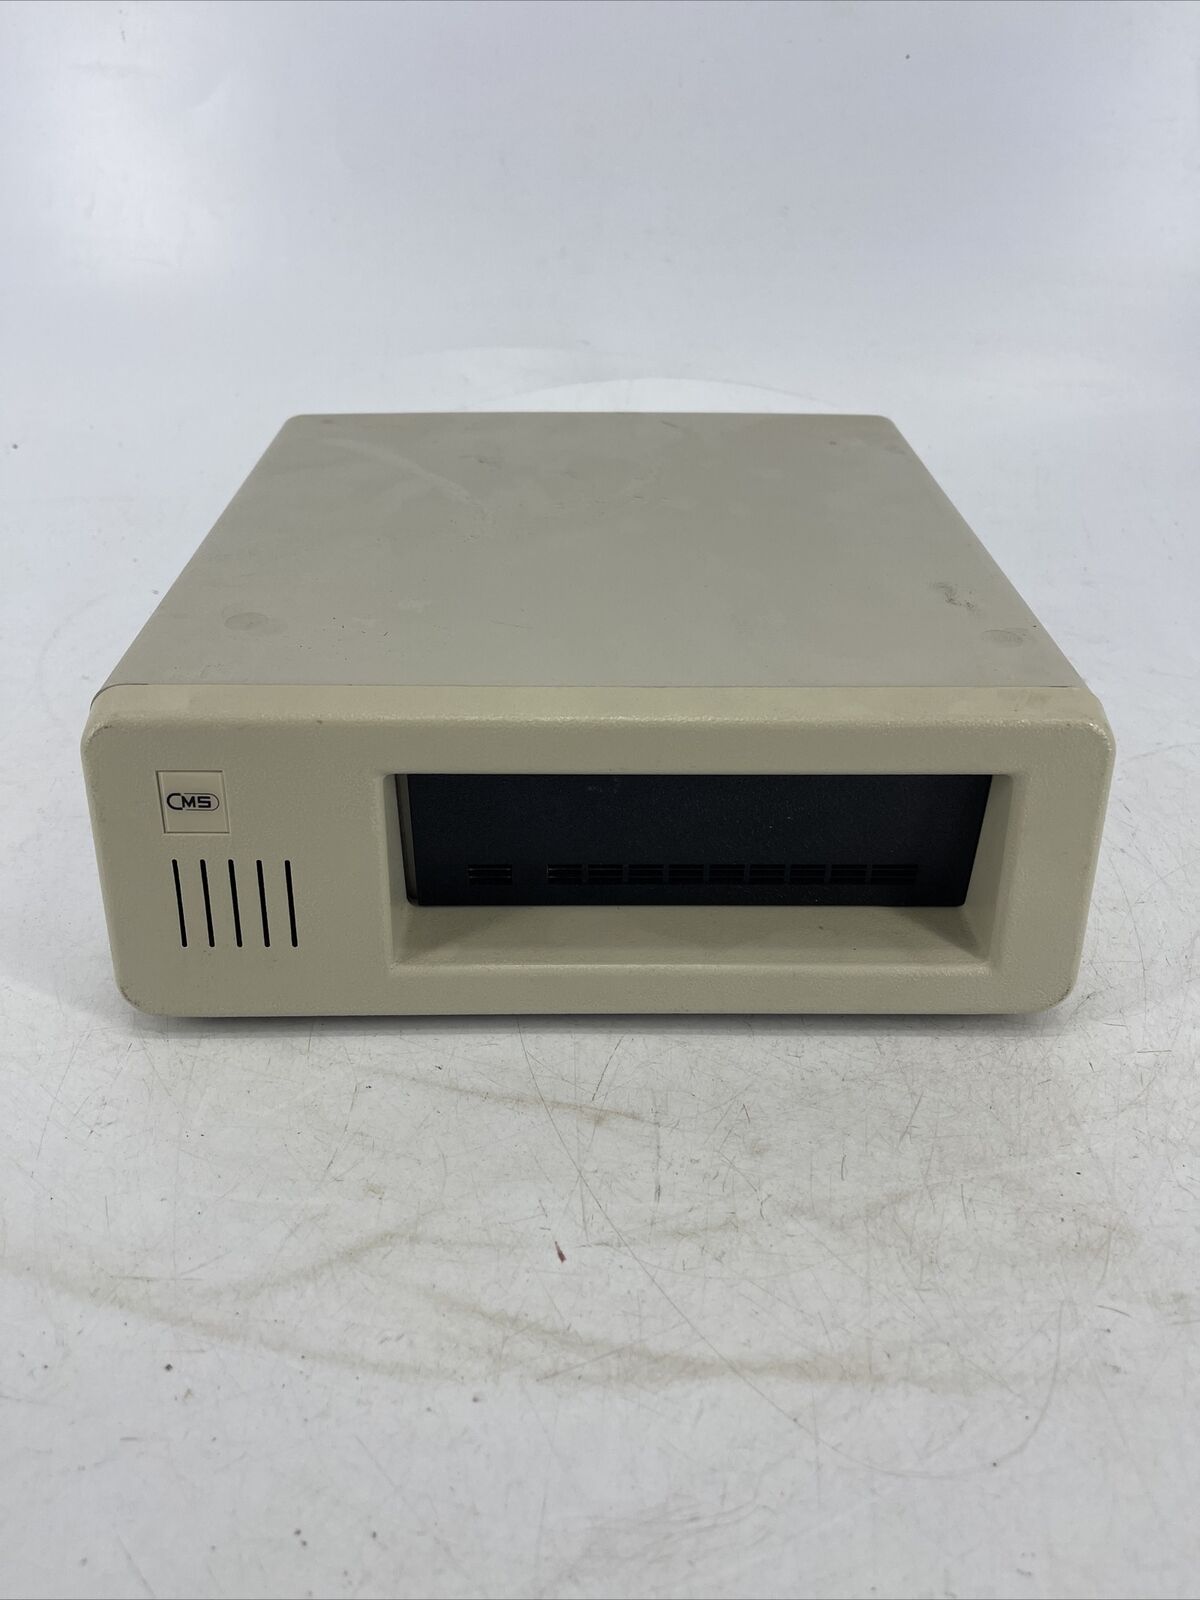 External SCSI Hard drive for Apple II MAC CMS Enhancements Model SD80 POWERS ON